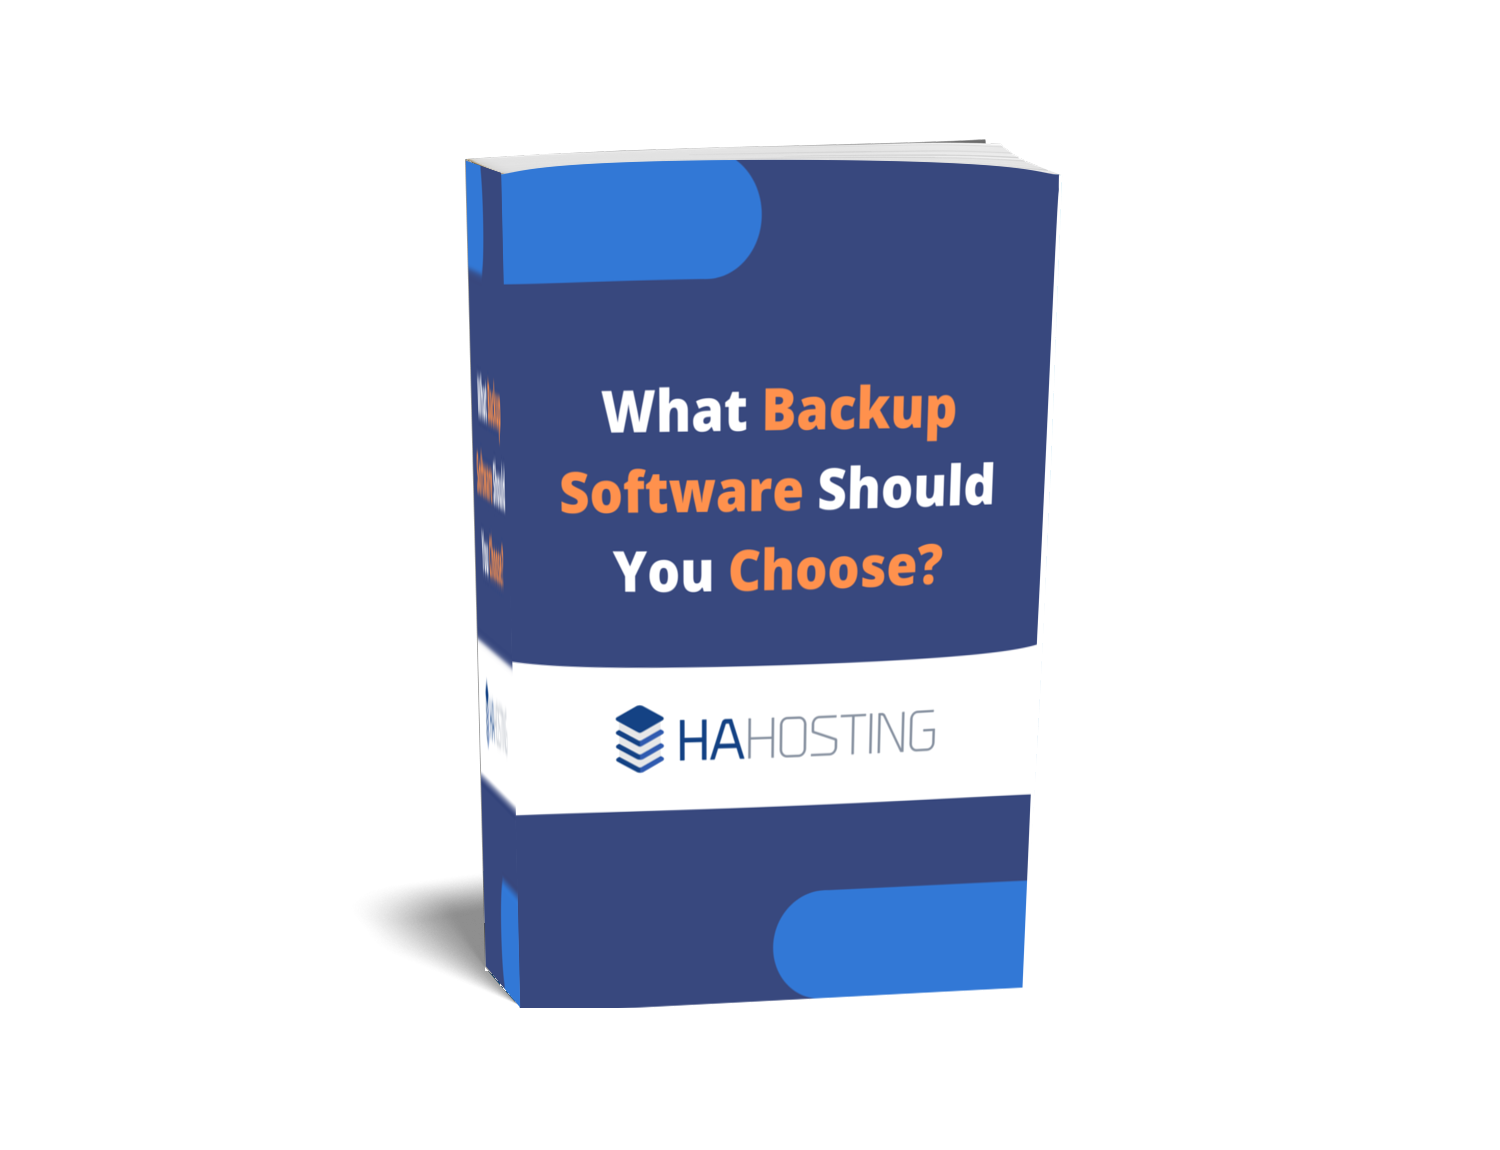 What backup software should you choose?